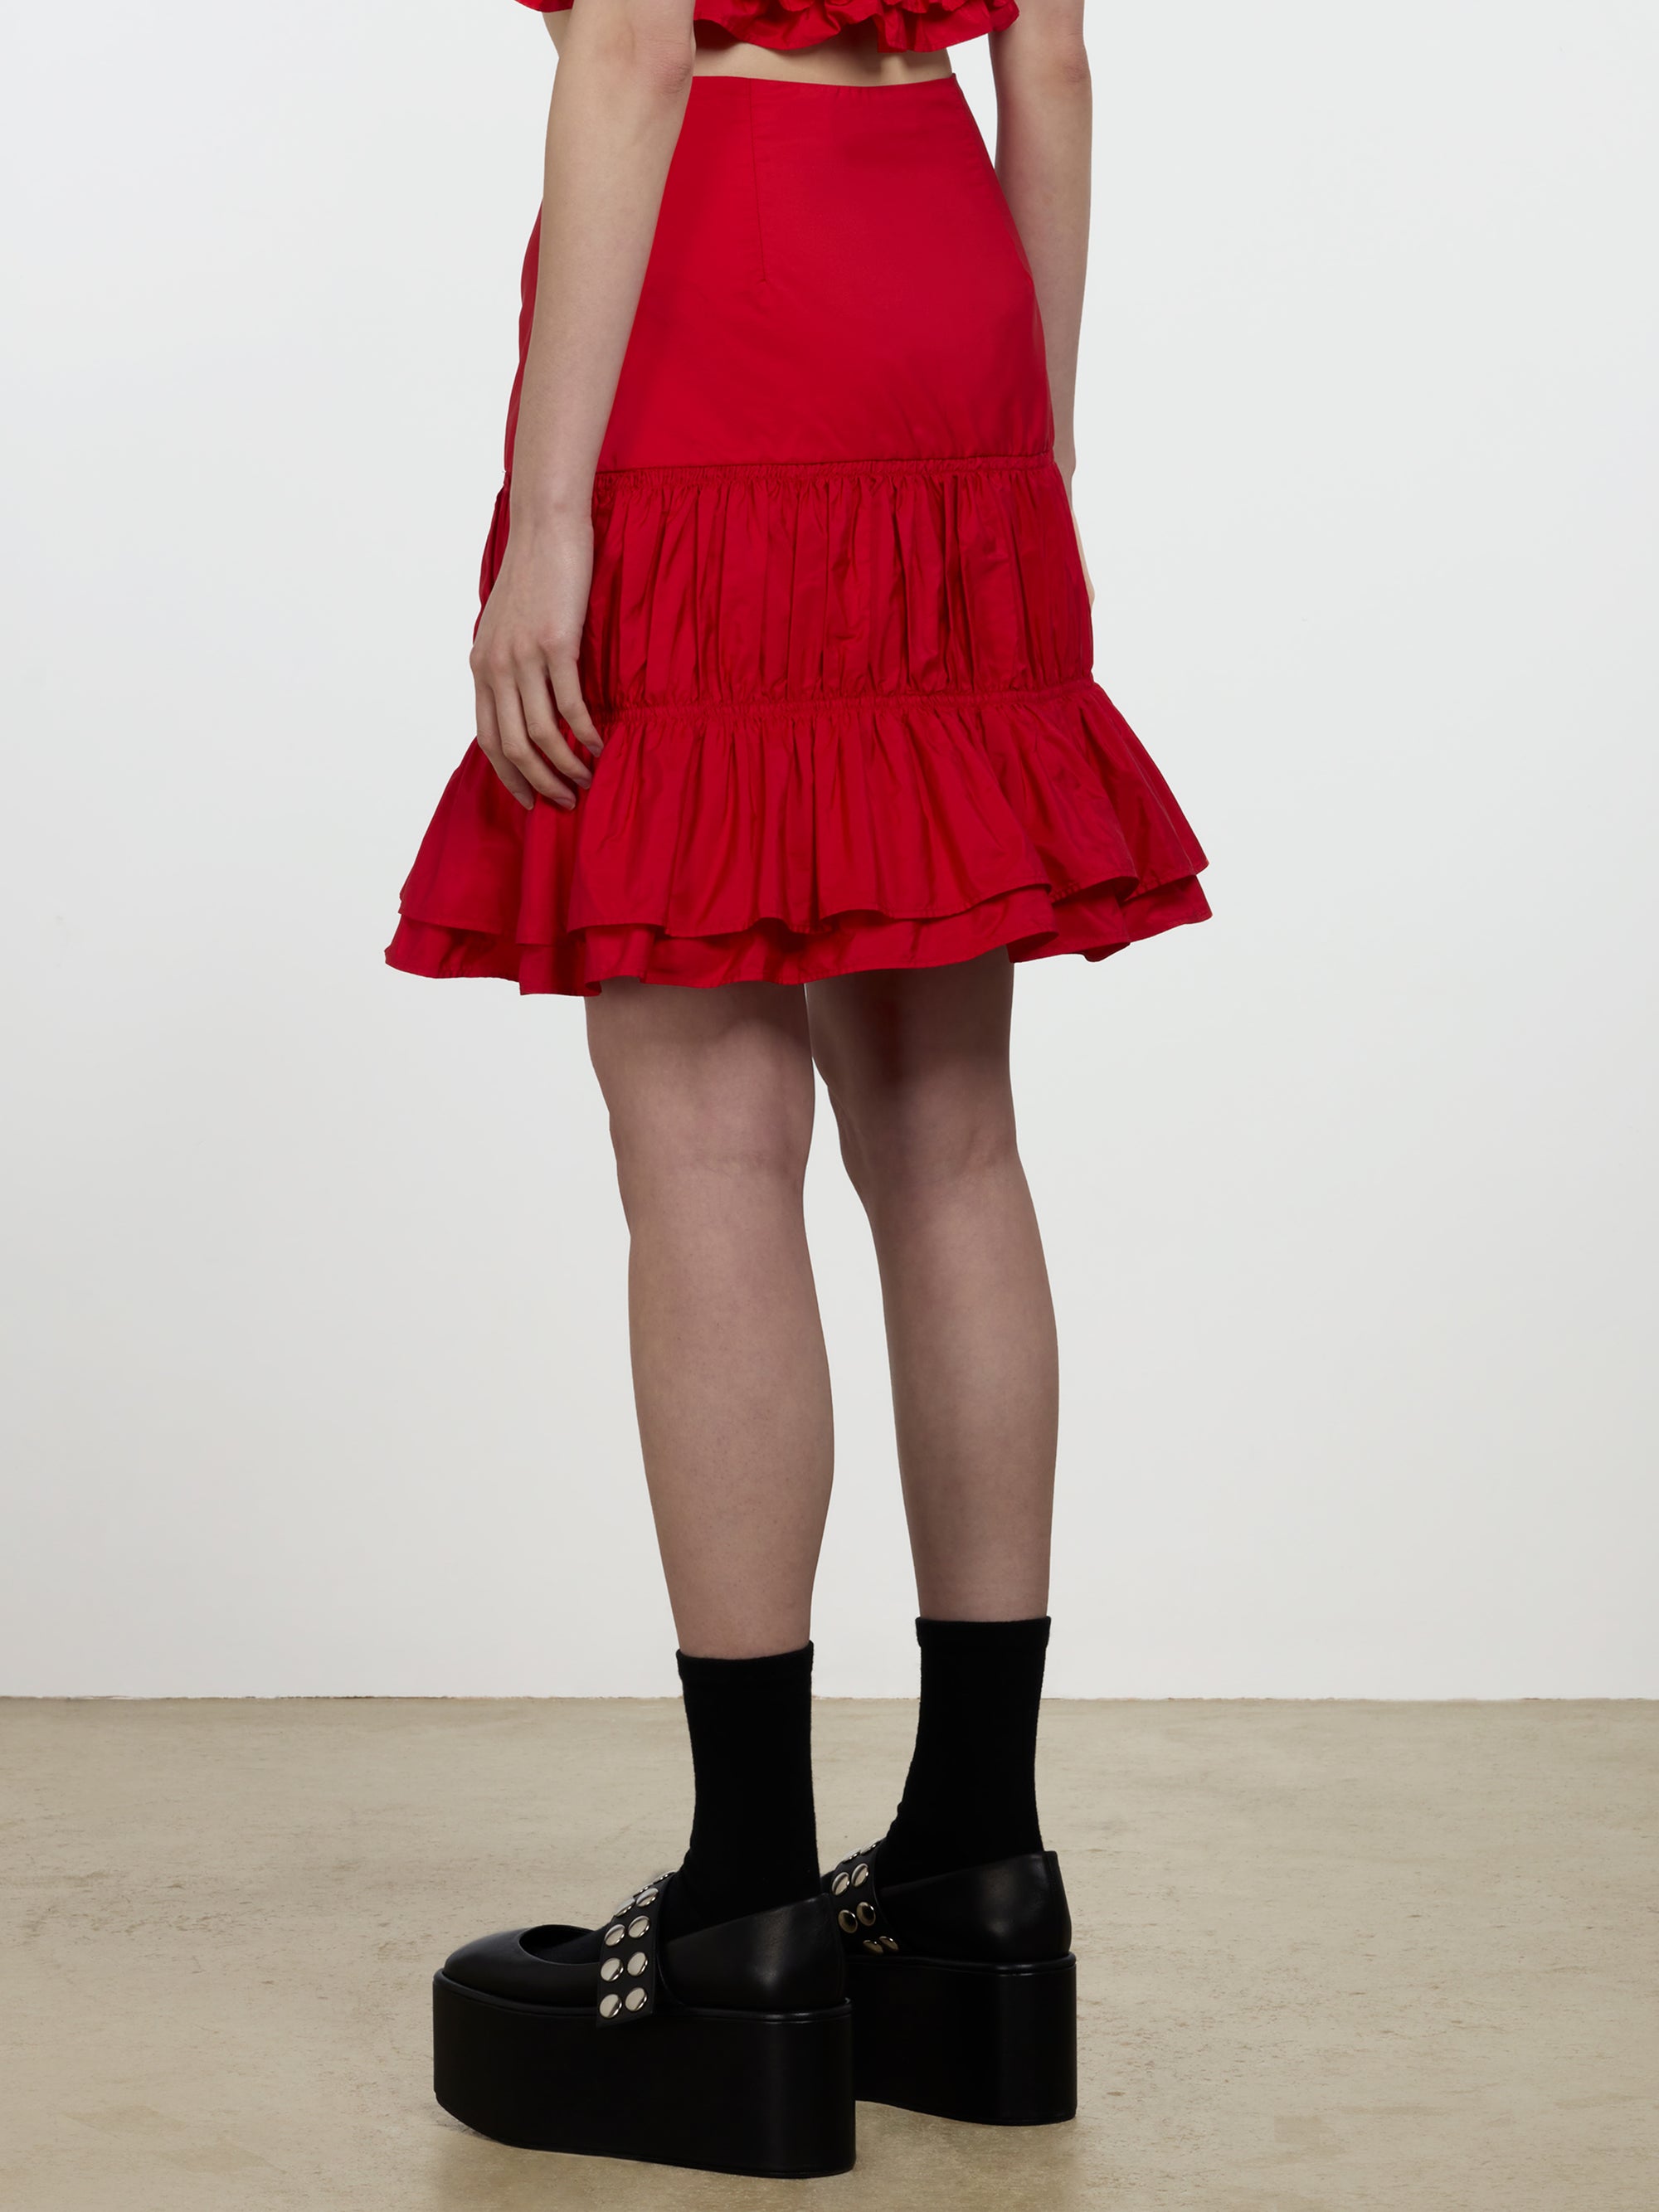 Molly Goddard - Carol Mini Skirt - (Red) view 3